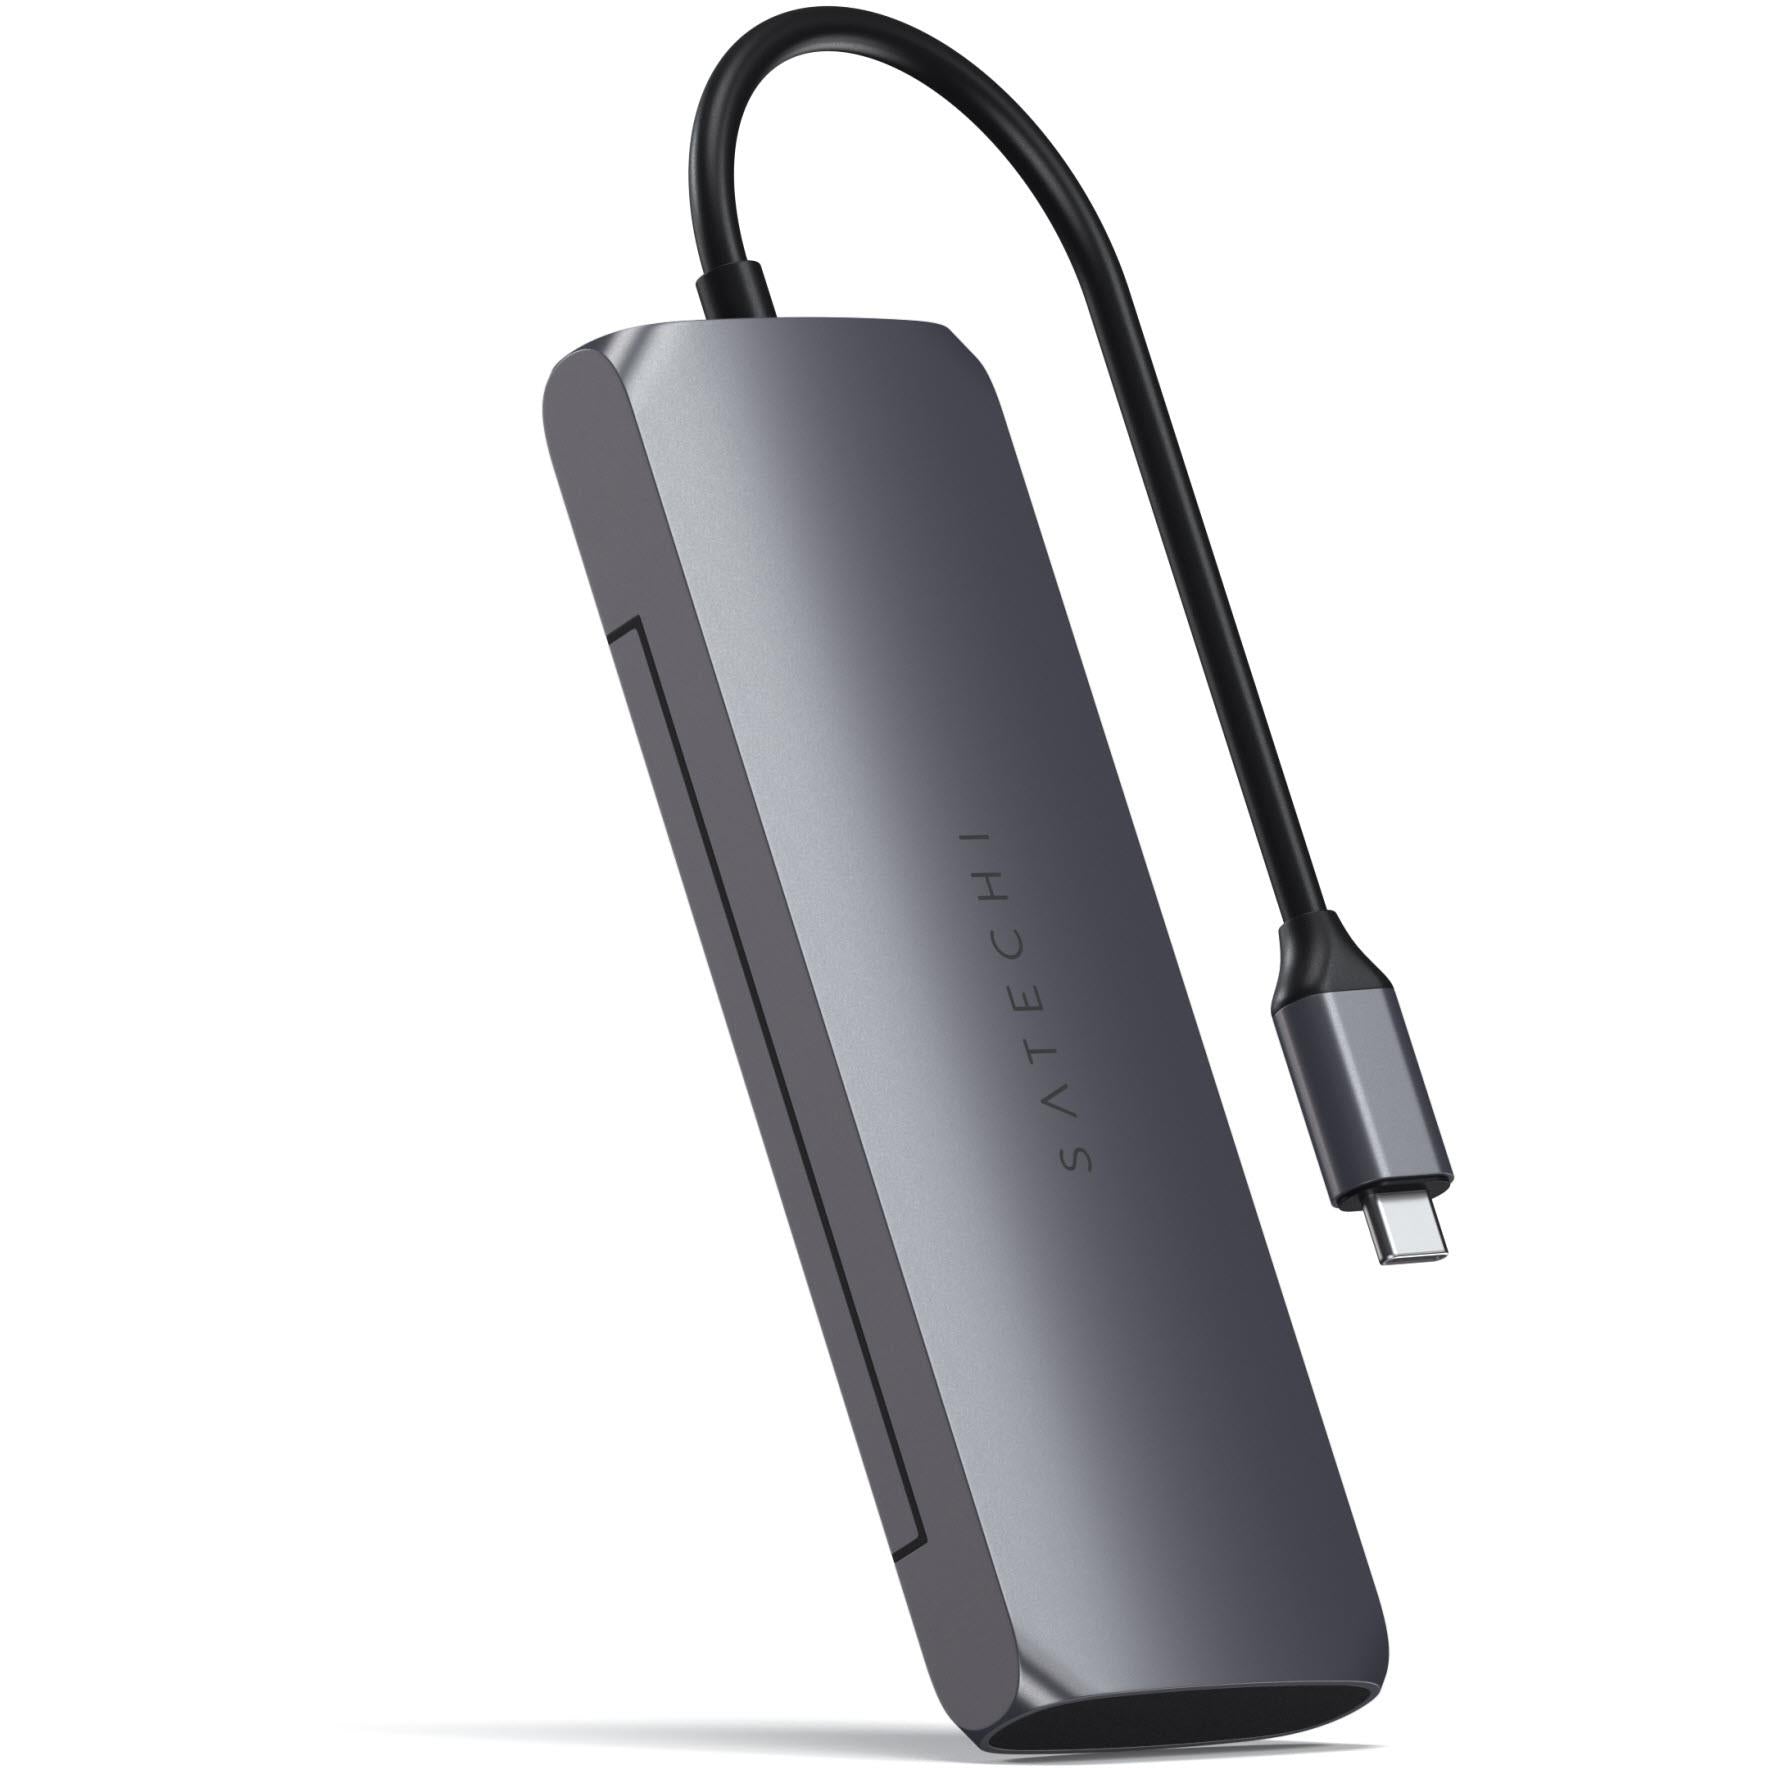 Anker 518 USB-C Adapter (8K HDMI) - Anker US